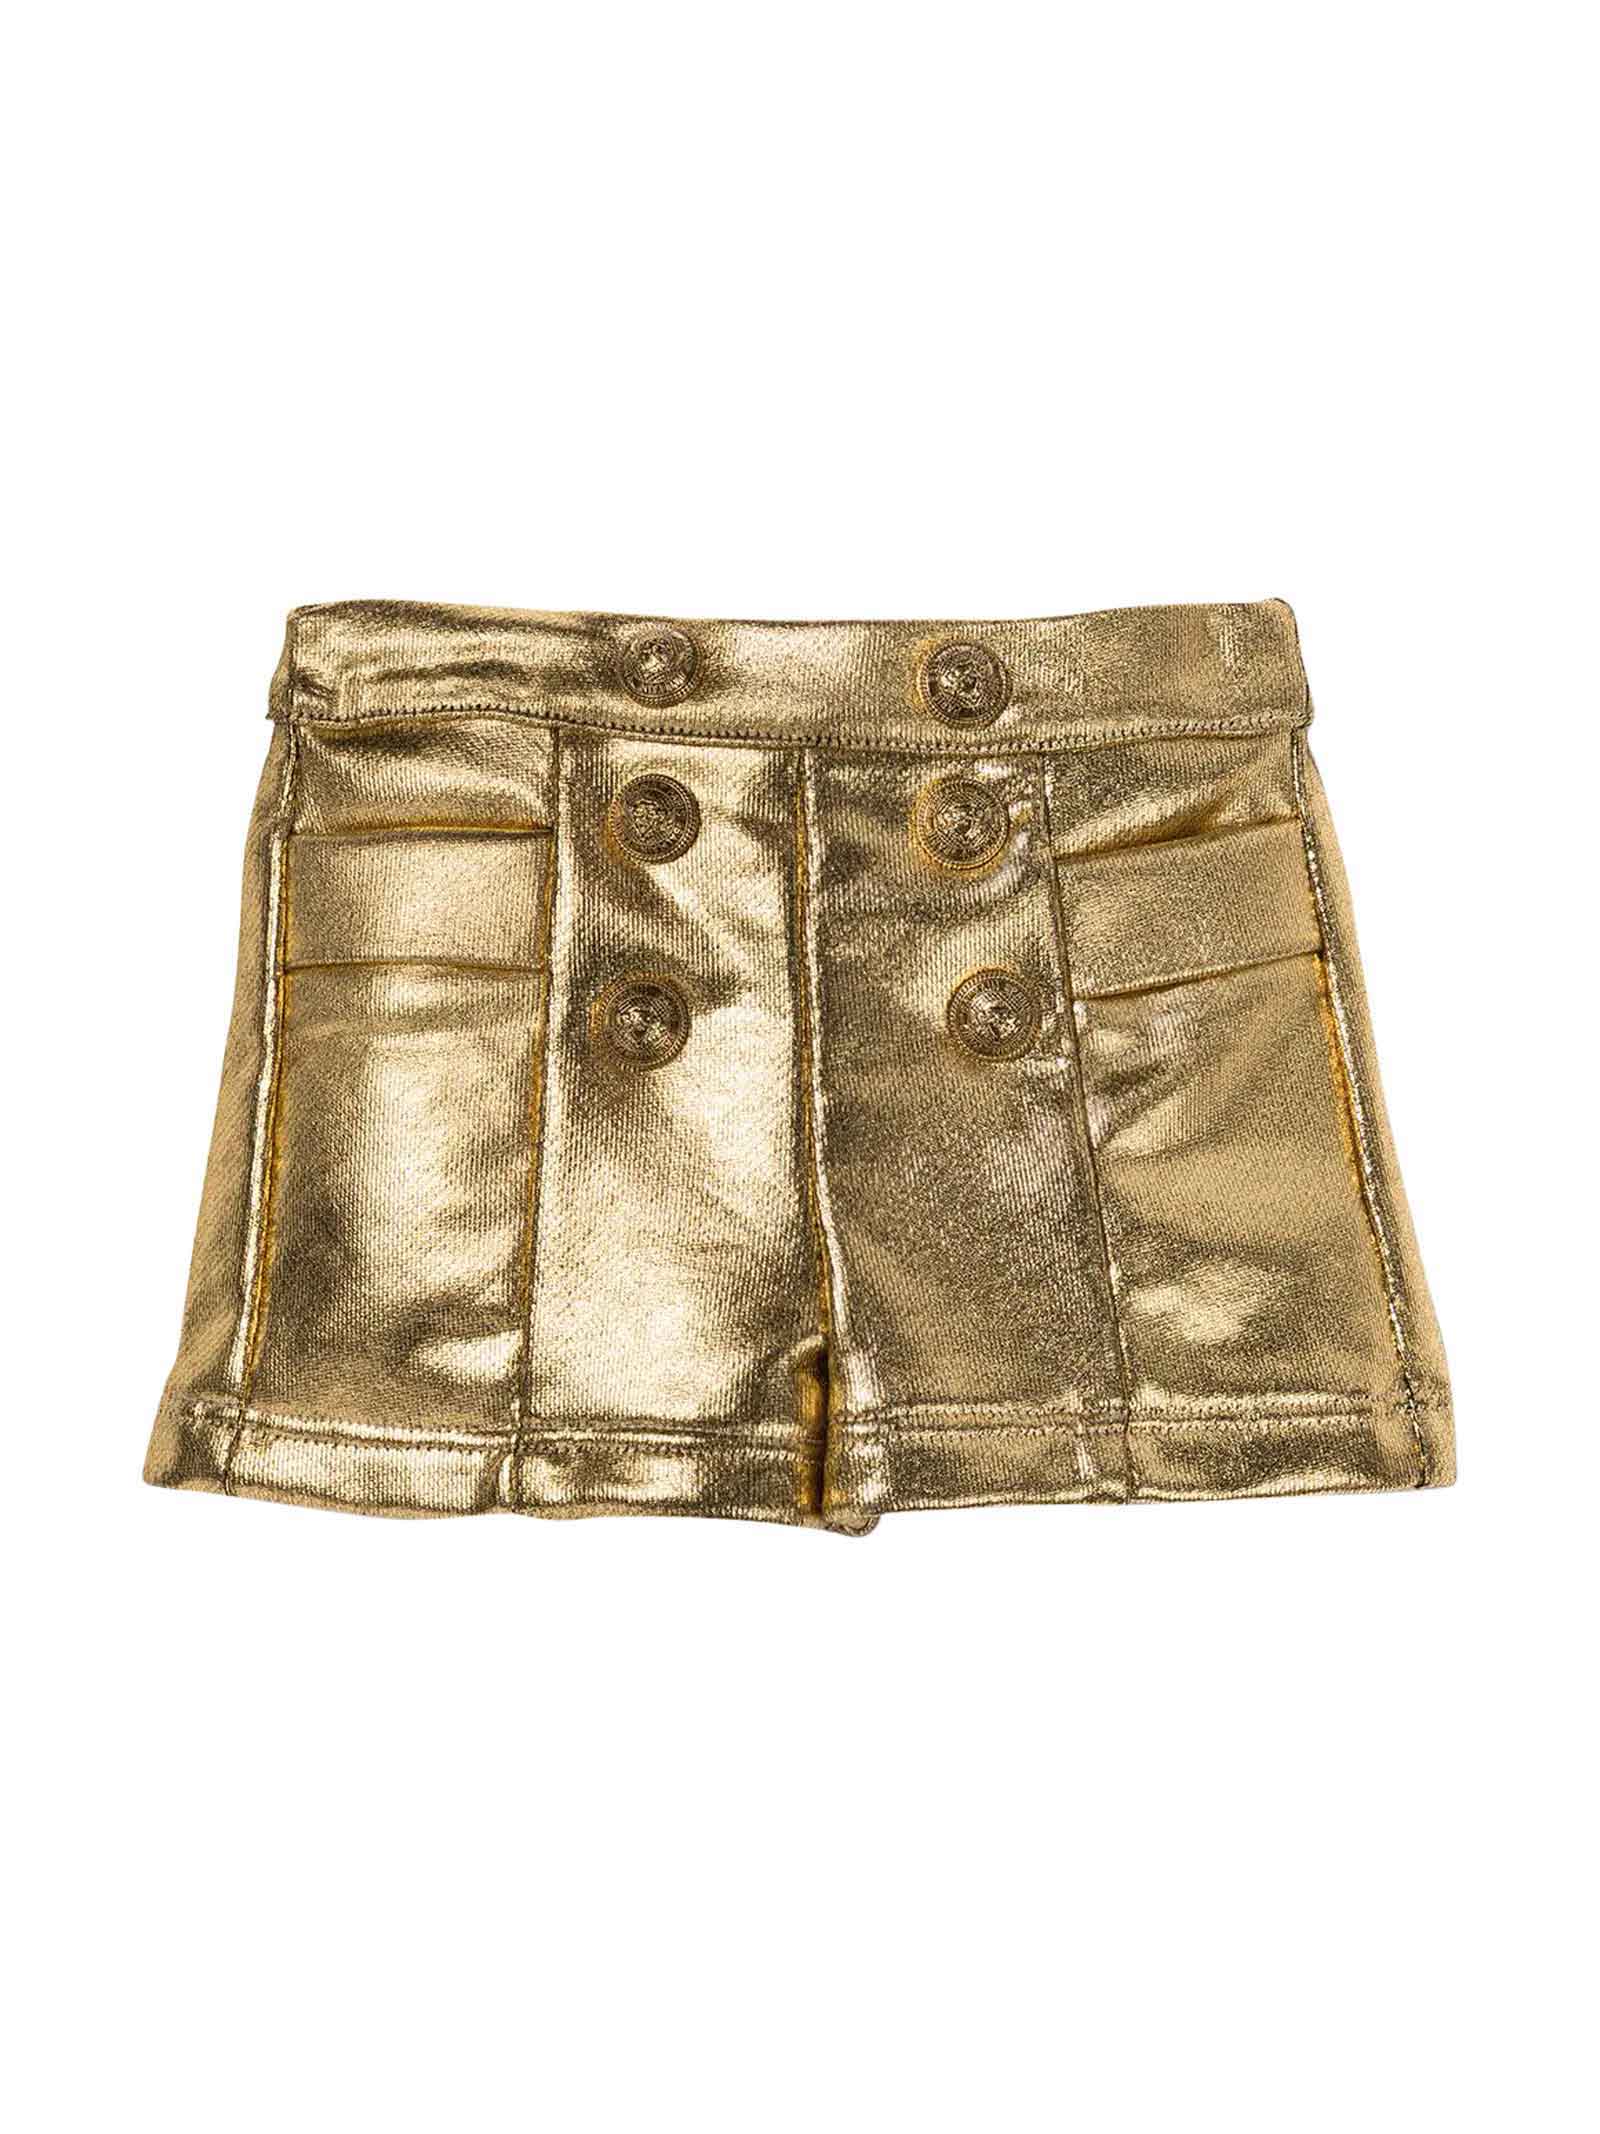 Balmain Metallic Gold Shorts With Buttons